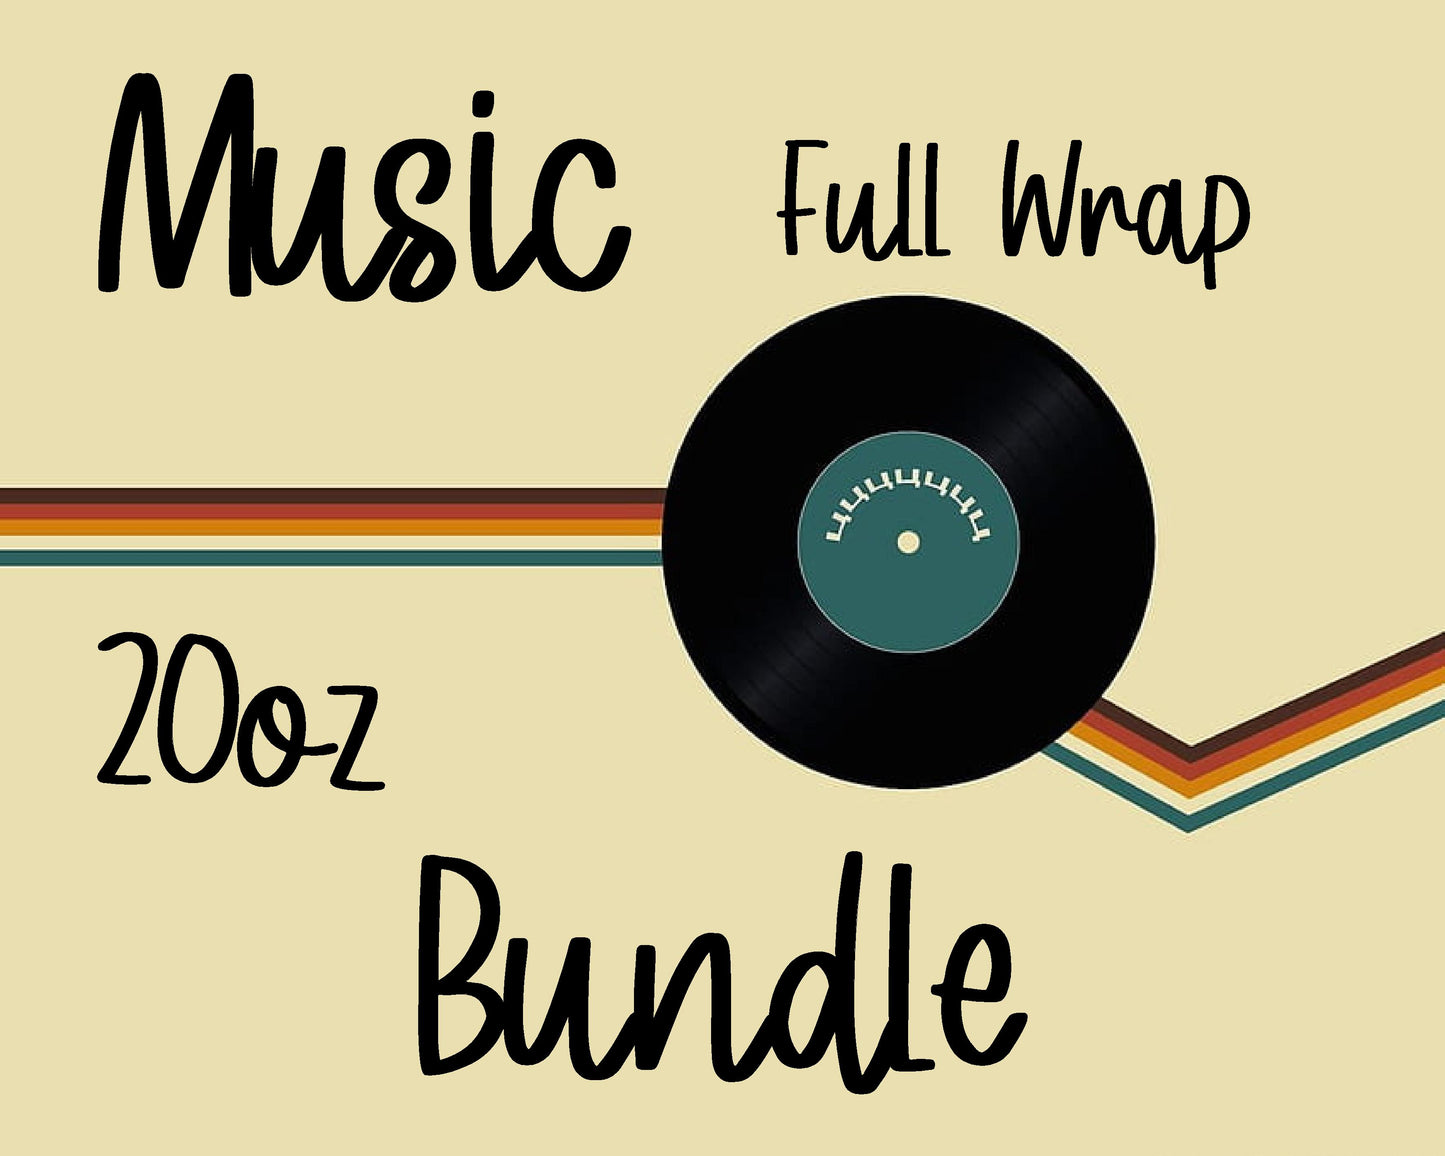 Mystery Music Full Wrap 20oz Bundle